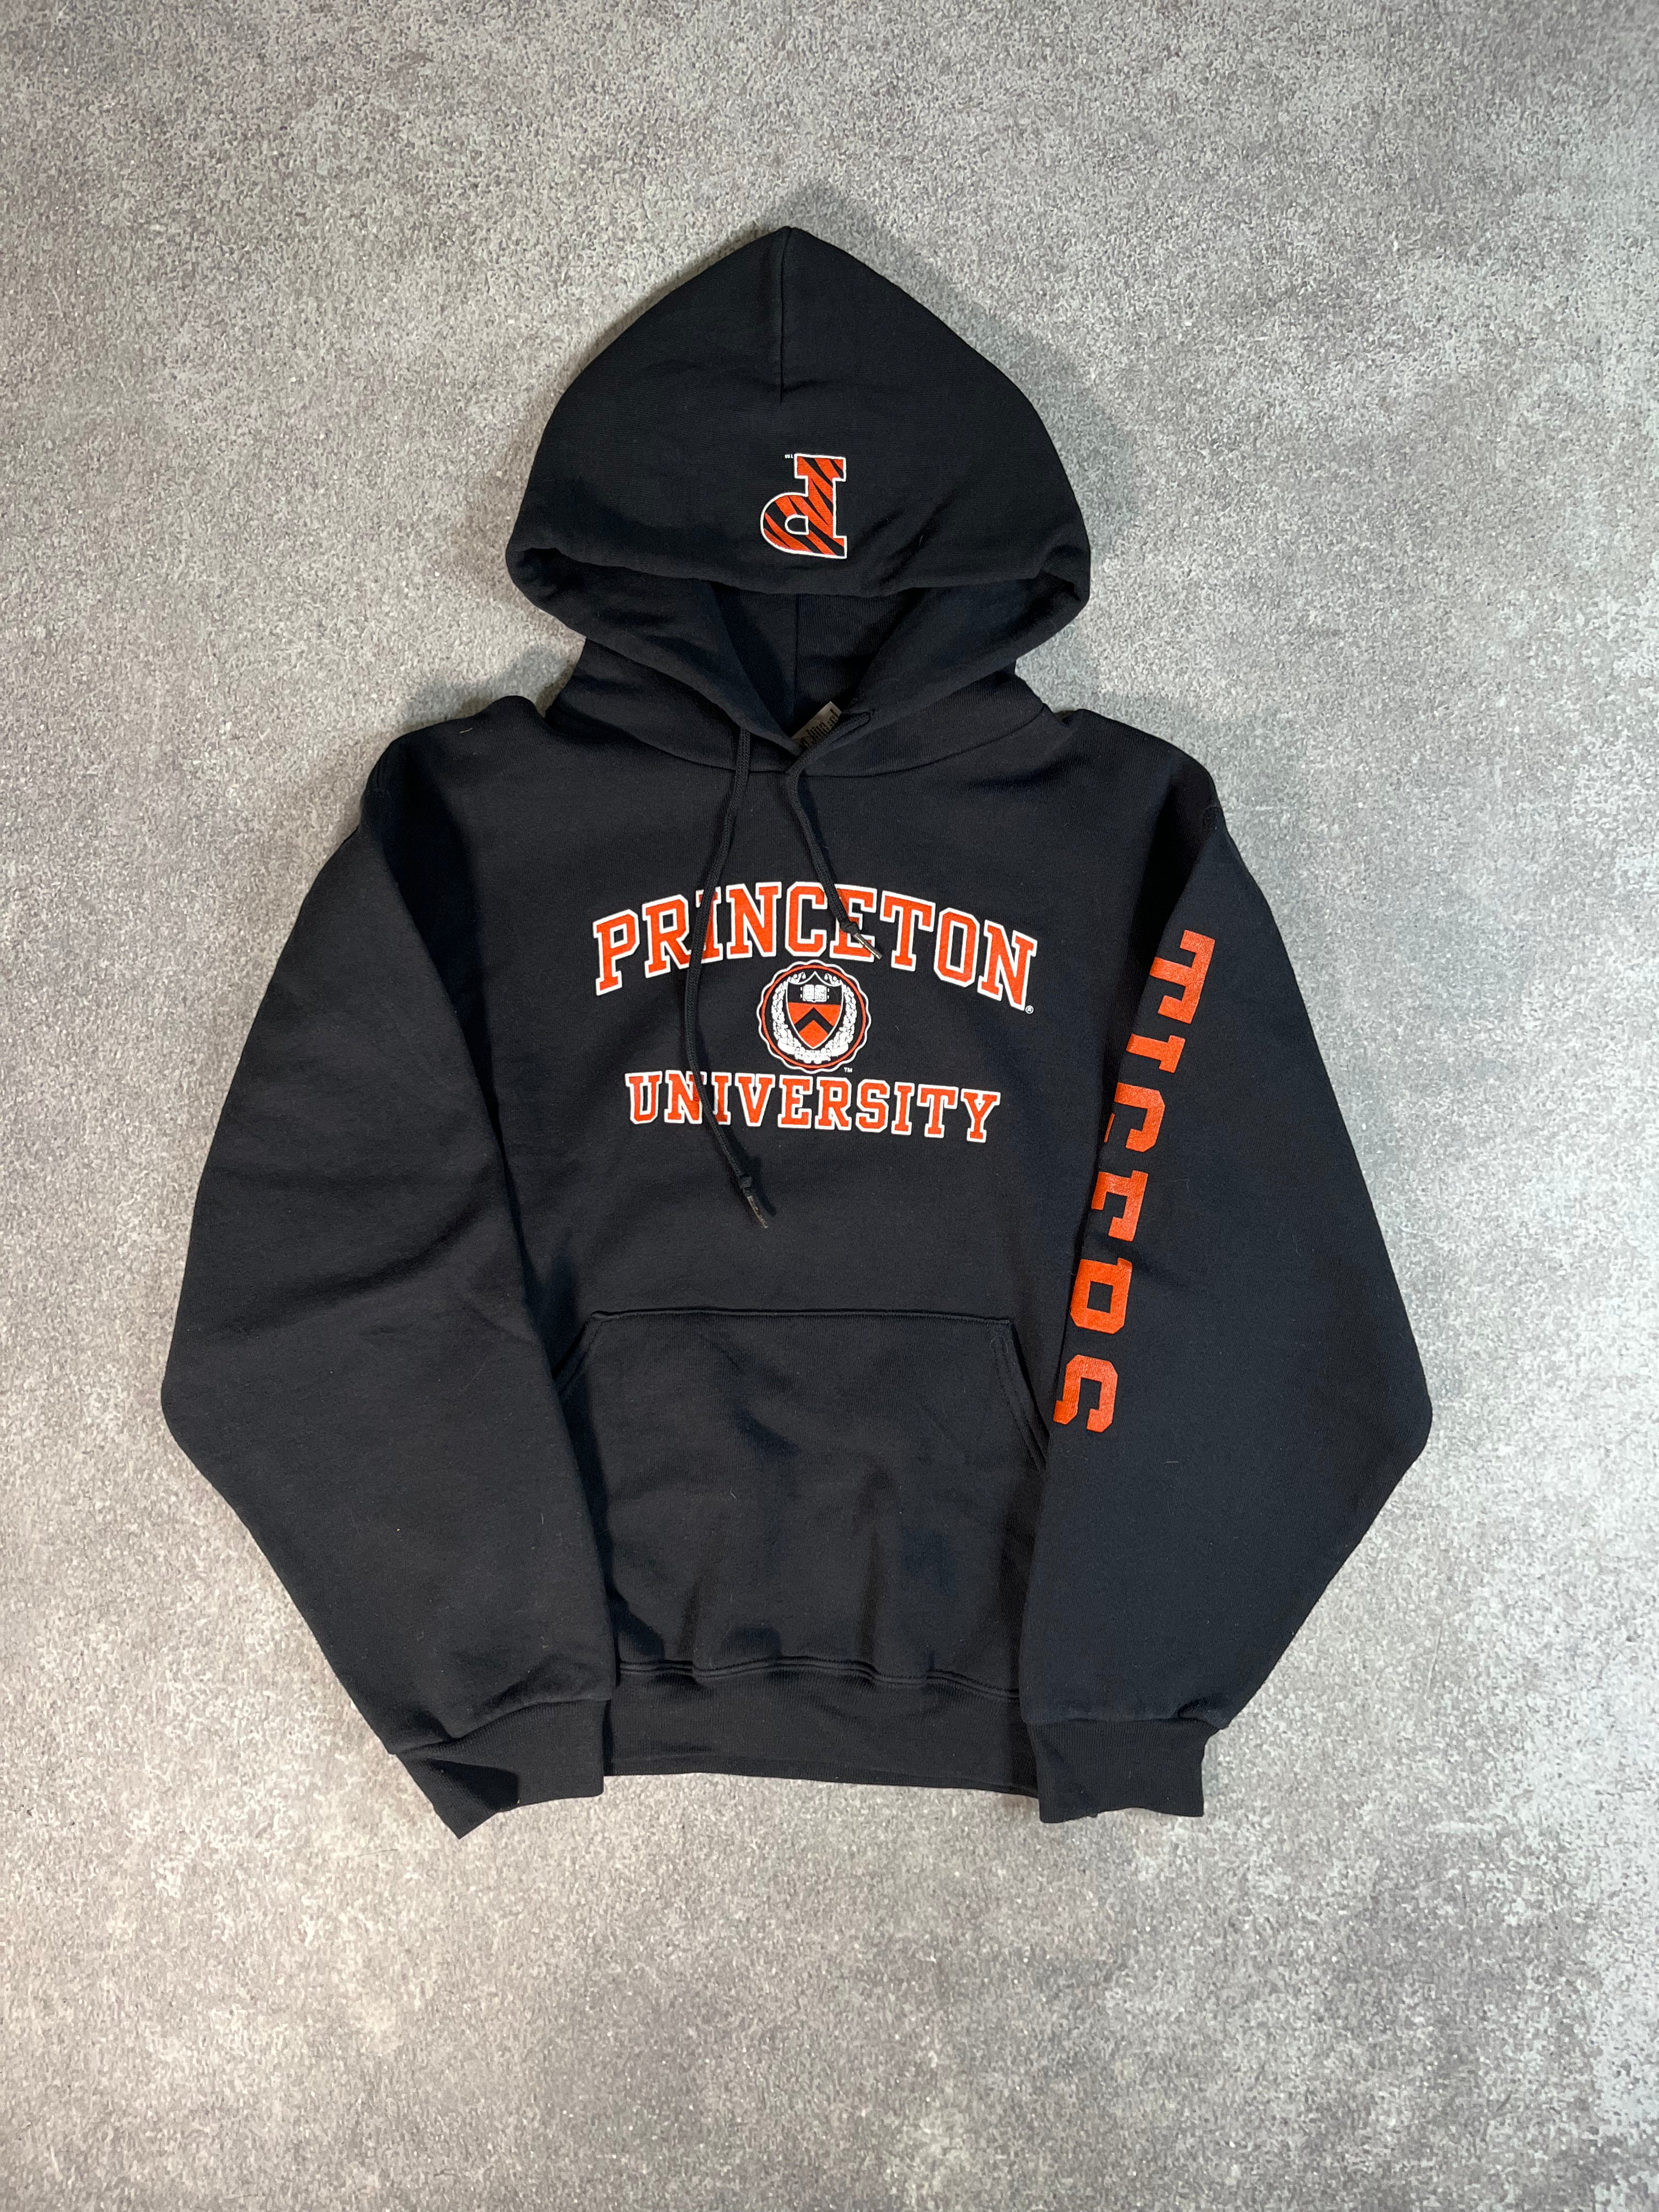 Princeton University Tigers Hoodie Black // X-Small - RHAGHOUSE VINTAGE